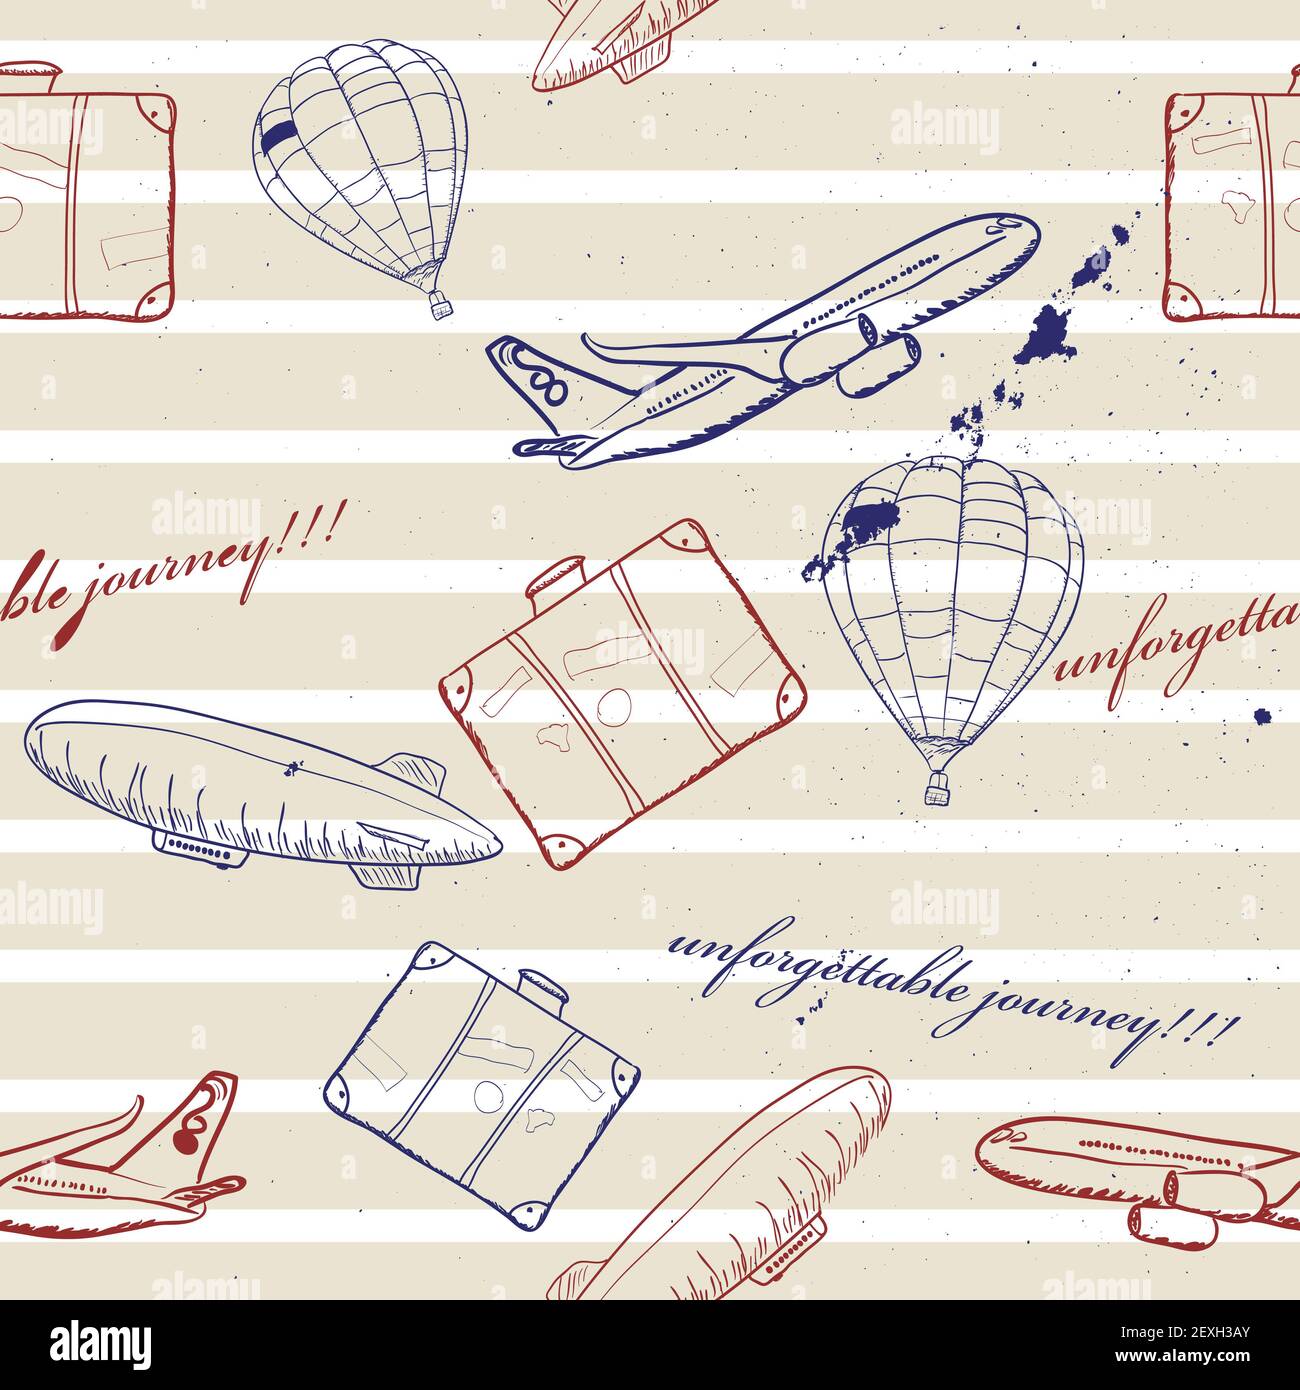 Flying vehicles journey seamless pattern. Stock Photo